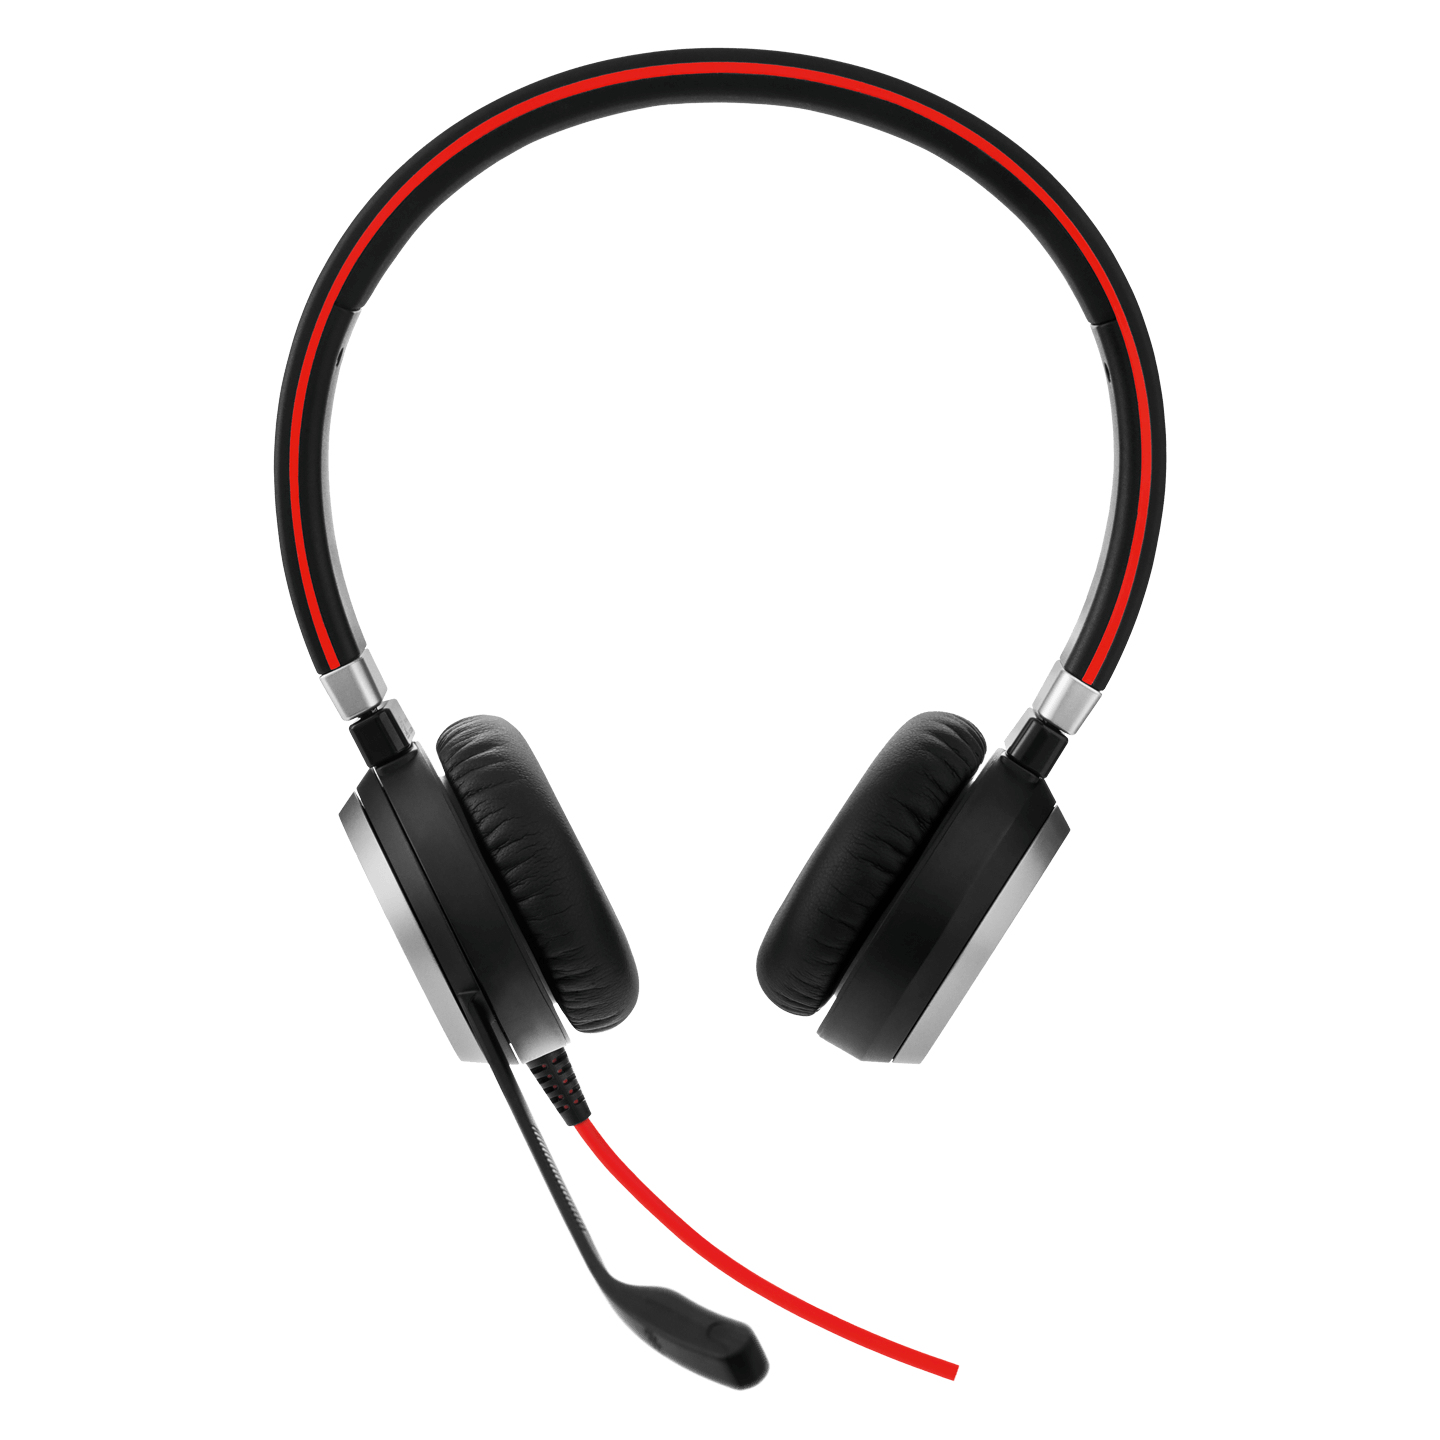 Jabra Evolve 40 UC stereo - Headset - On-Ear